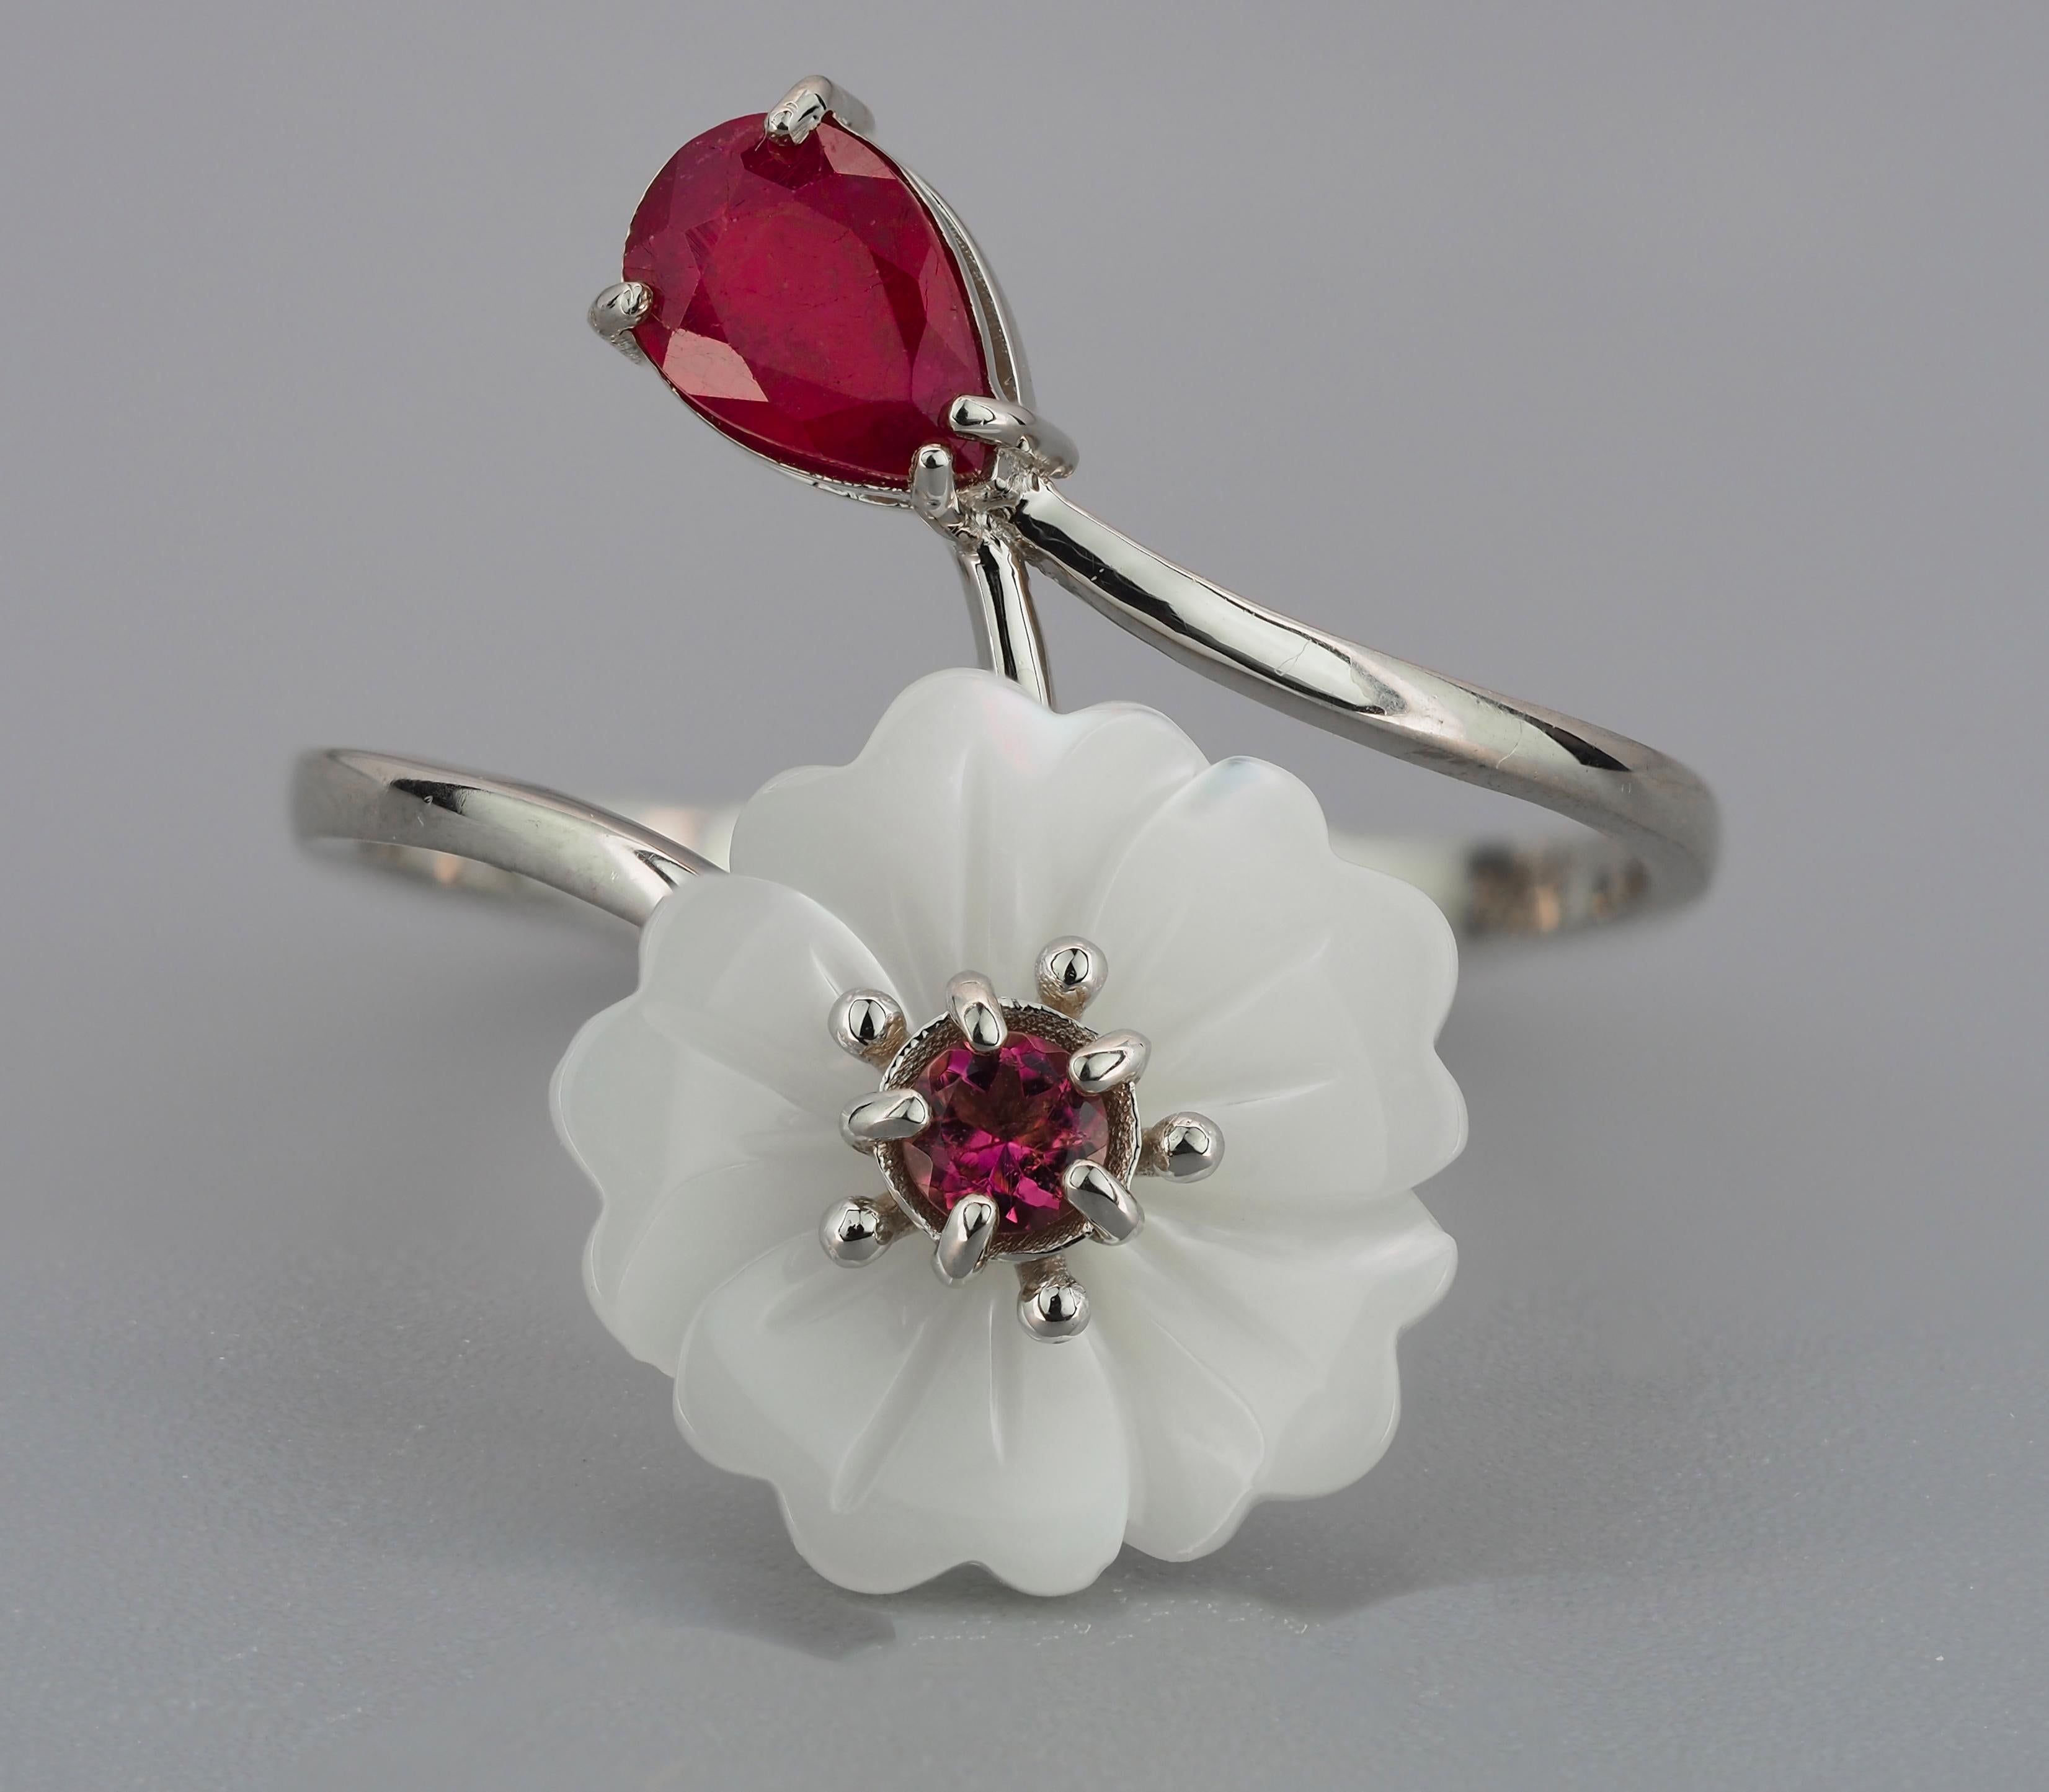 For Sale:  Carved Flower 14k ring with gemstones 7